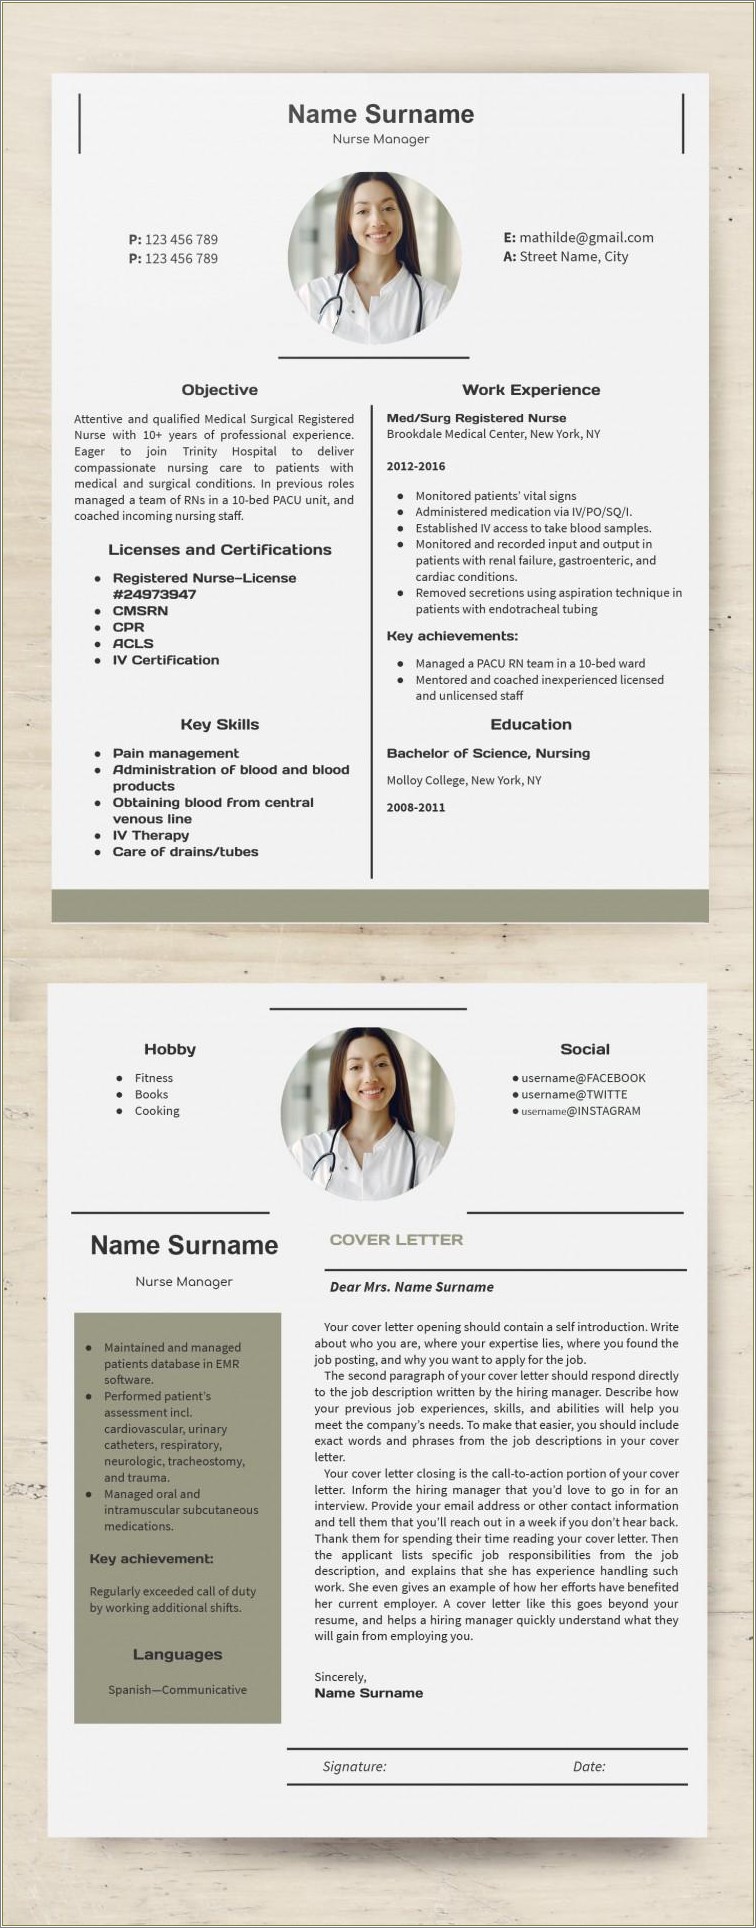 Free Resume Samples For Registered Nurse